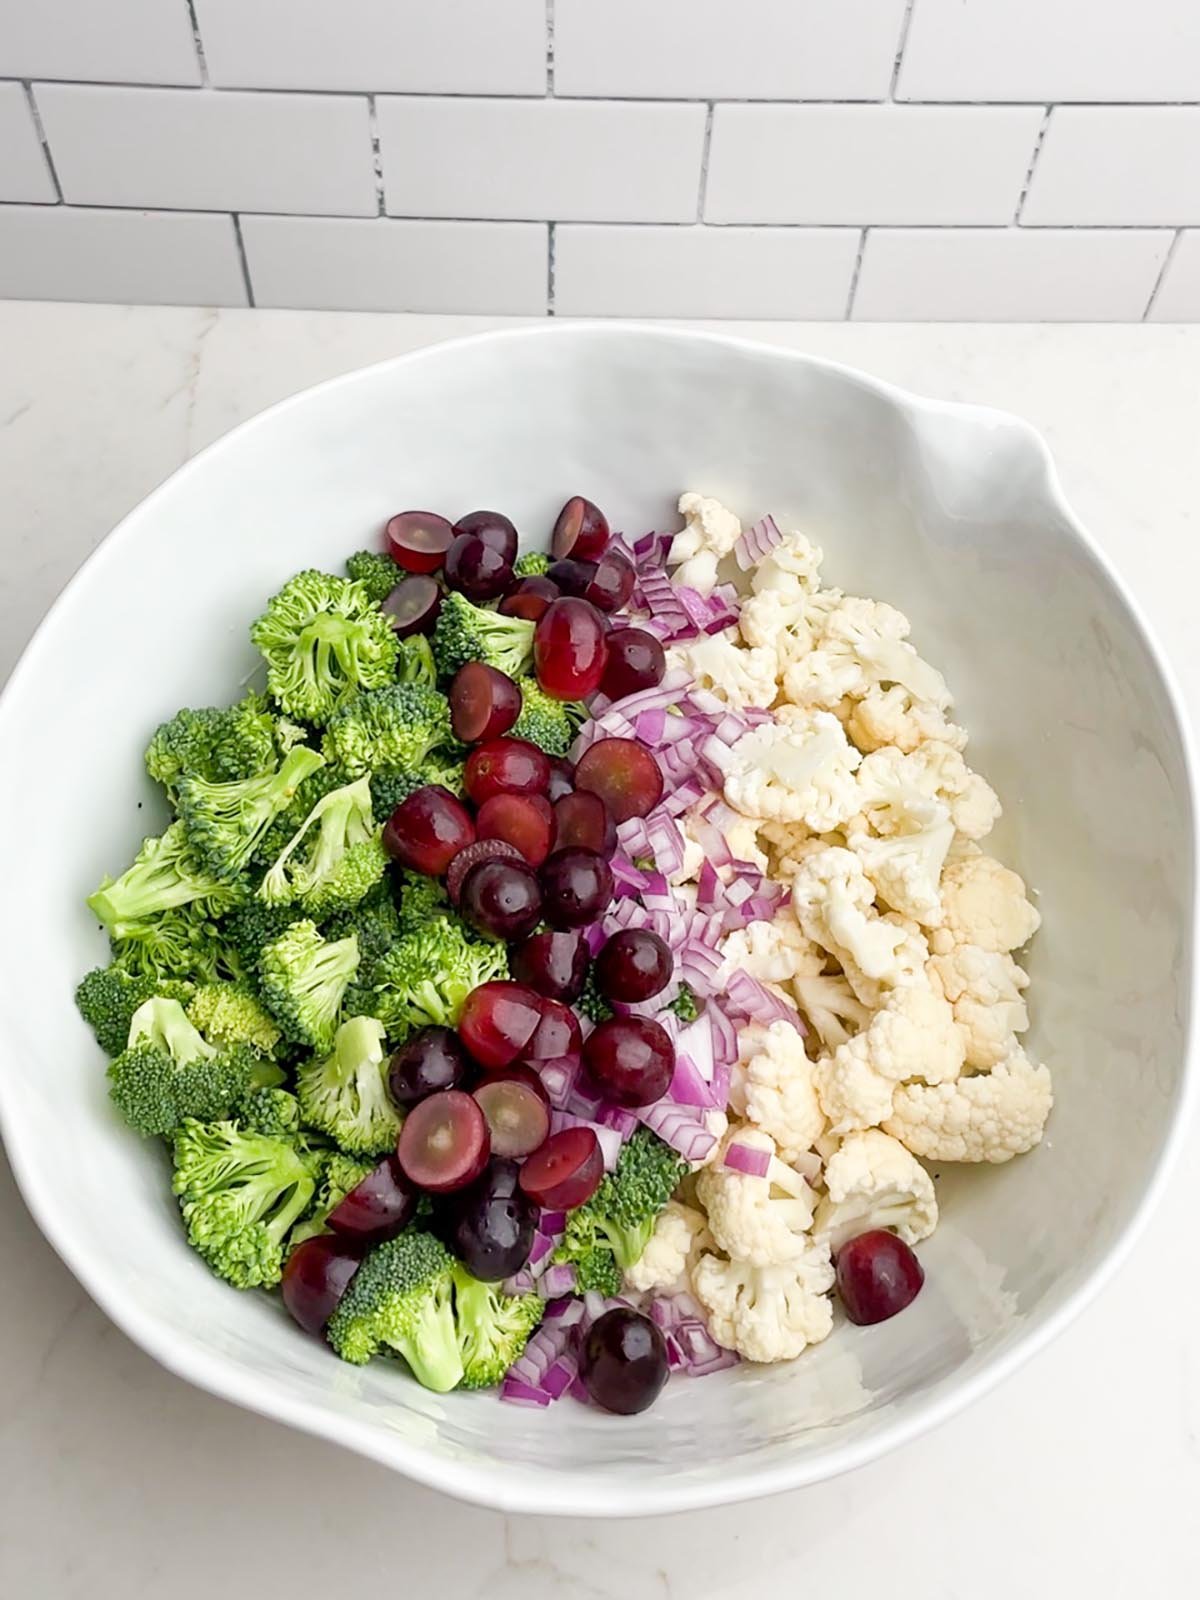 Broccoli cauliflower bacon salad ingredients in a white bowl